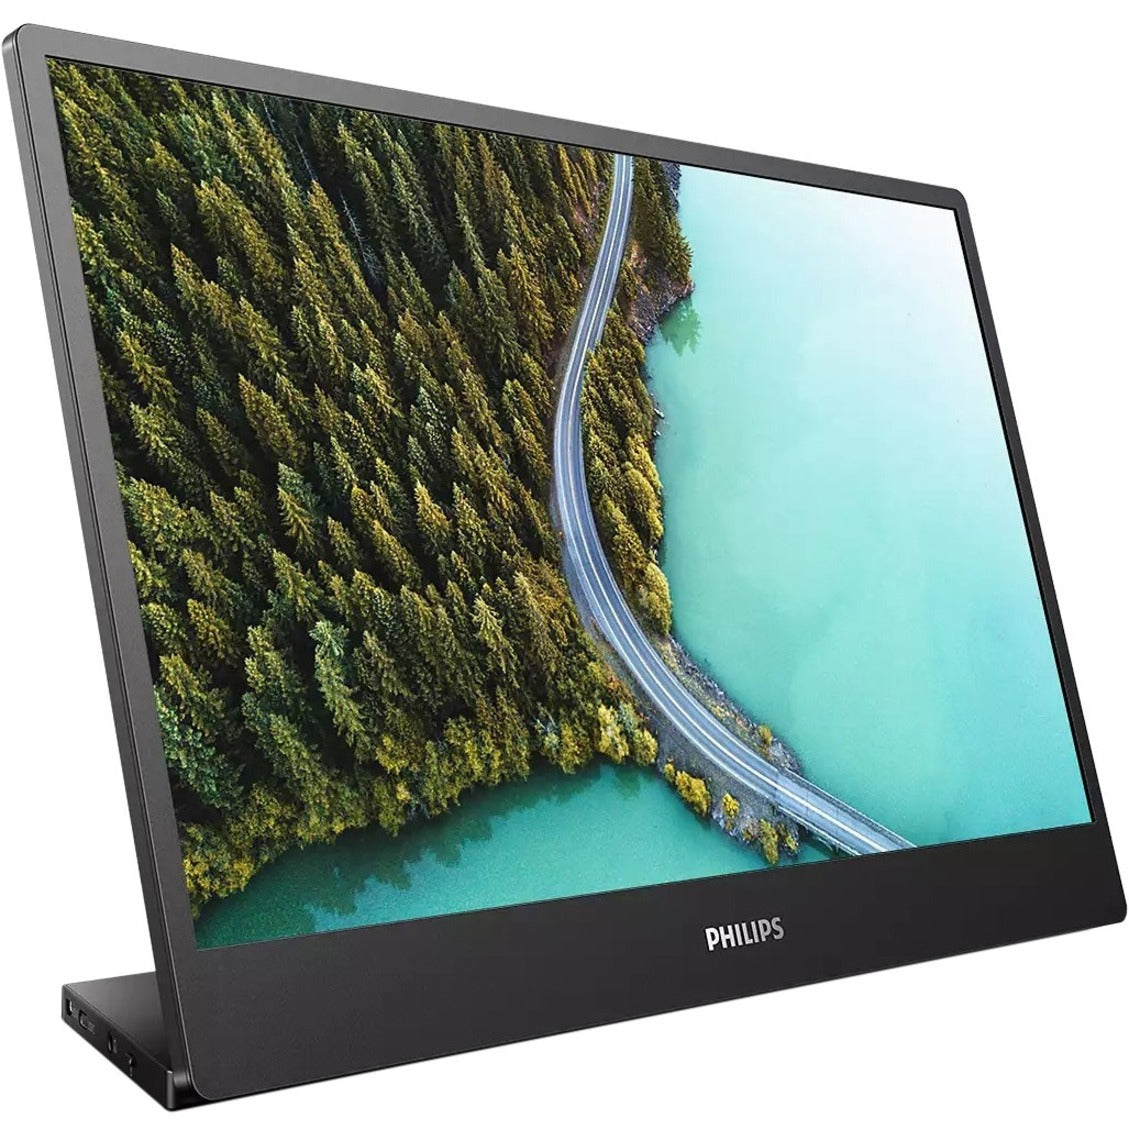 Philips 16B1P3300 15.6 Full HD LCD Monitor, Black, 1920 x 1080, 75 Hz, 700:1, 250 Nit, 48 Month Warranty